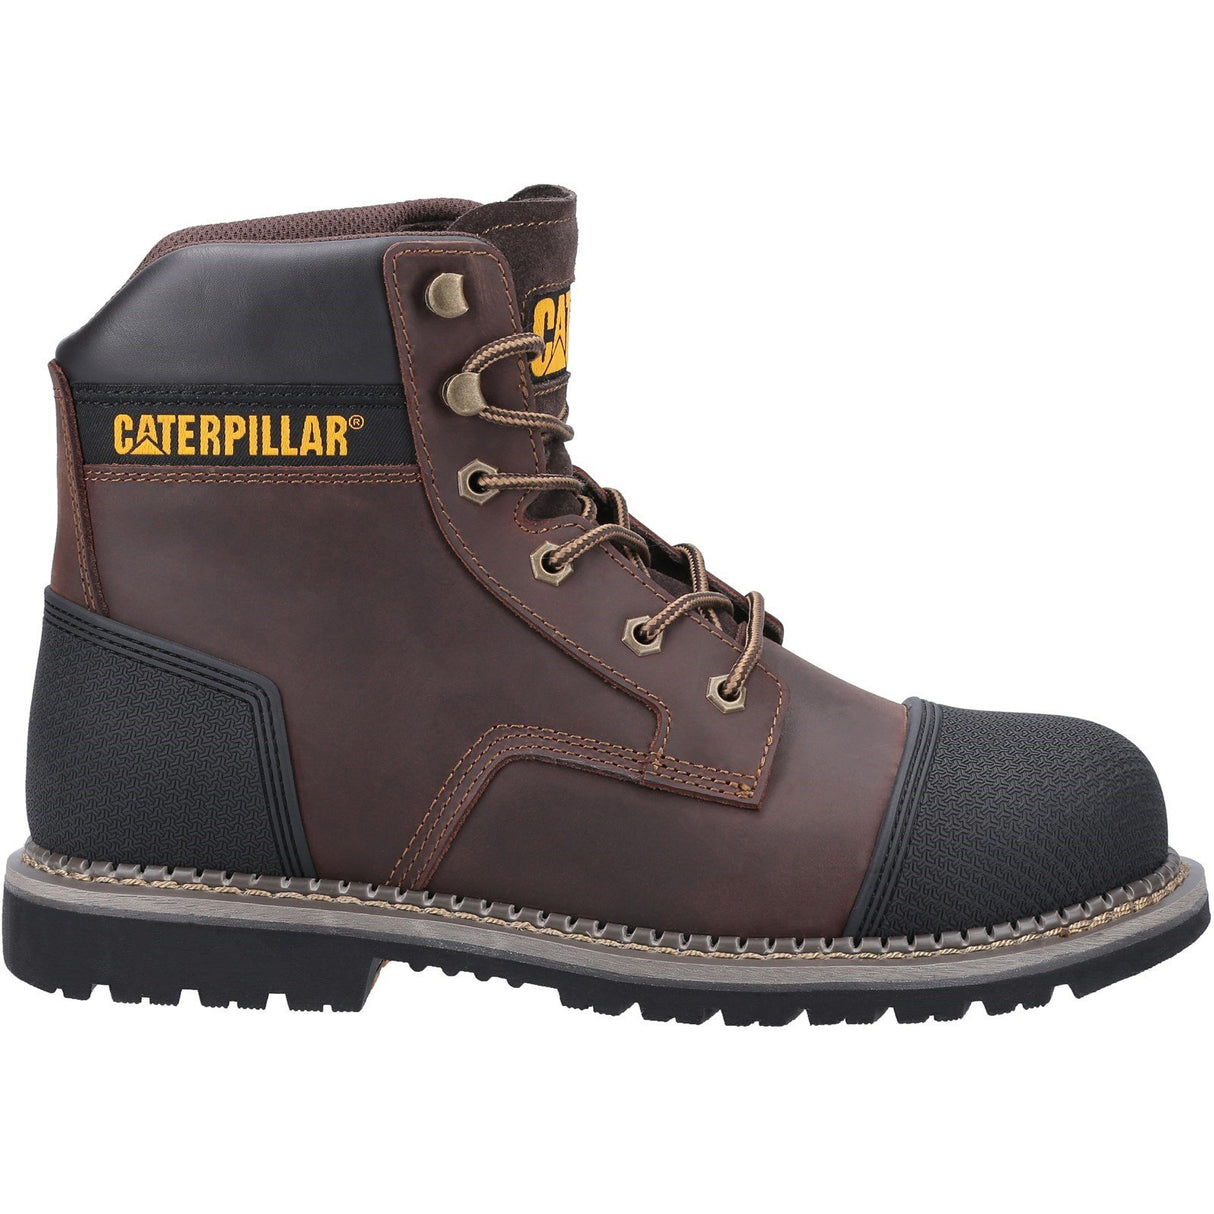 Caterpillar Powerplant S3 Safety Boots